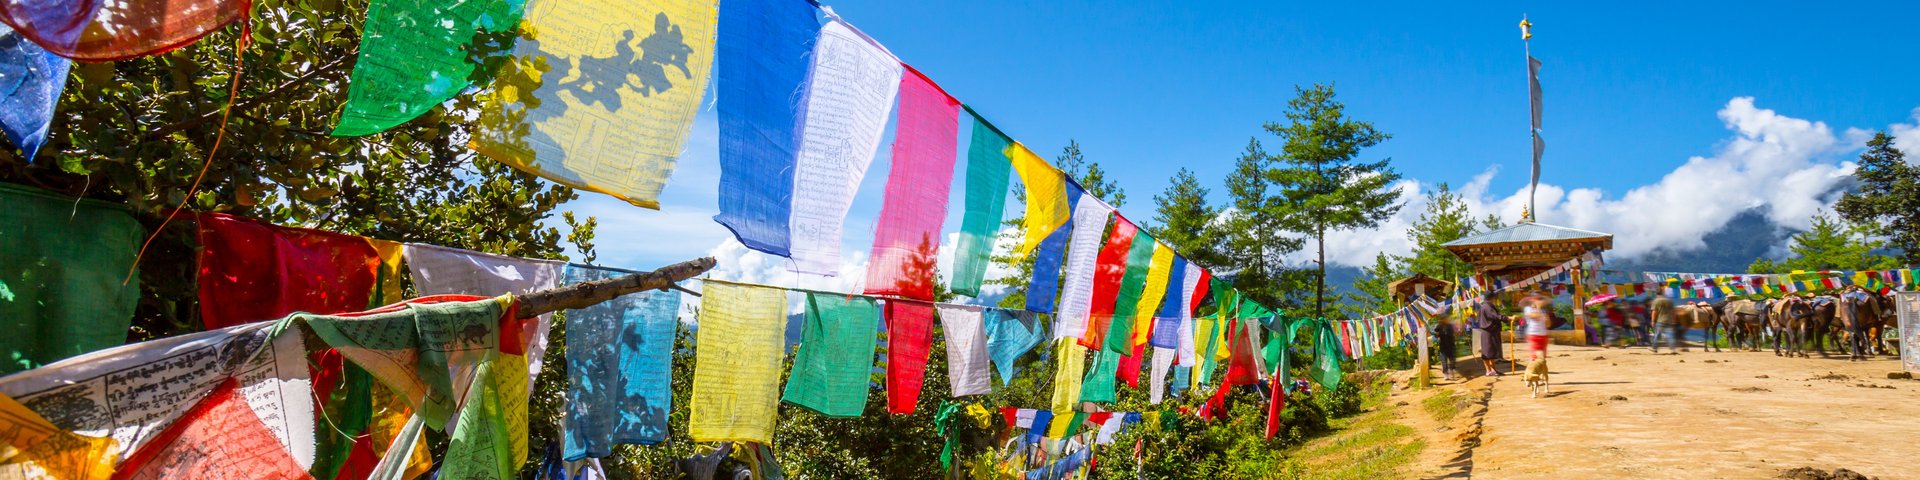 Gebetsfahnen entlang eines Pfades in Bhutan